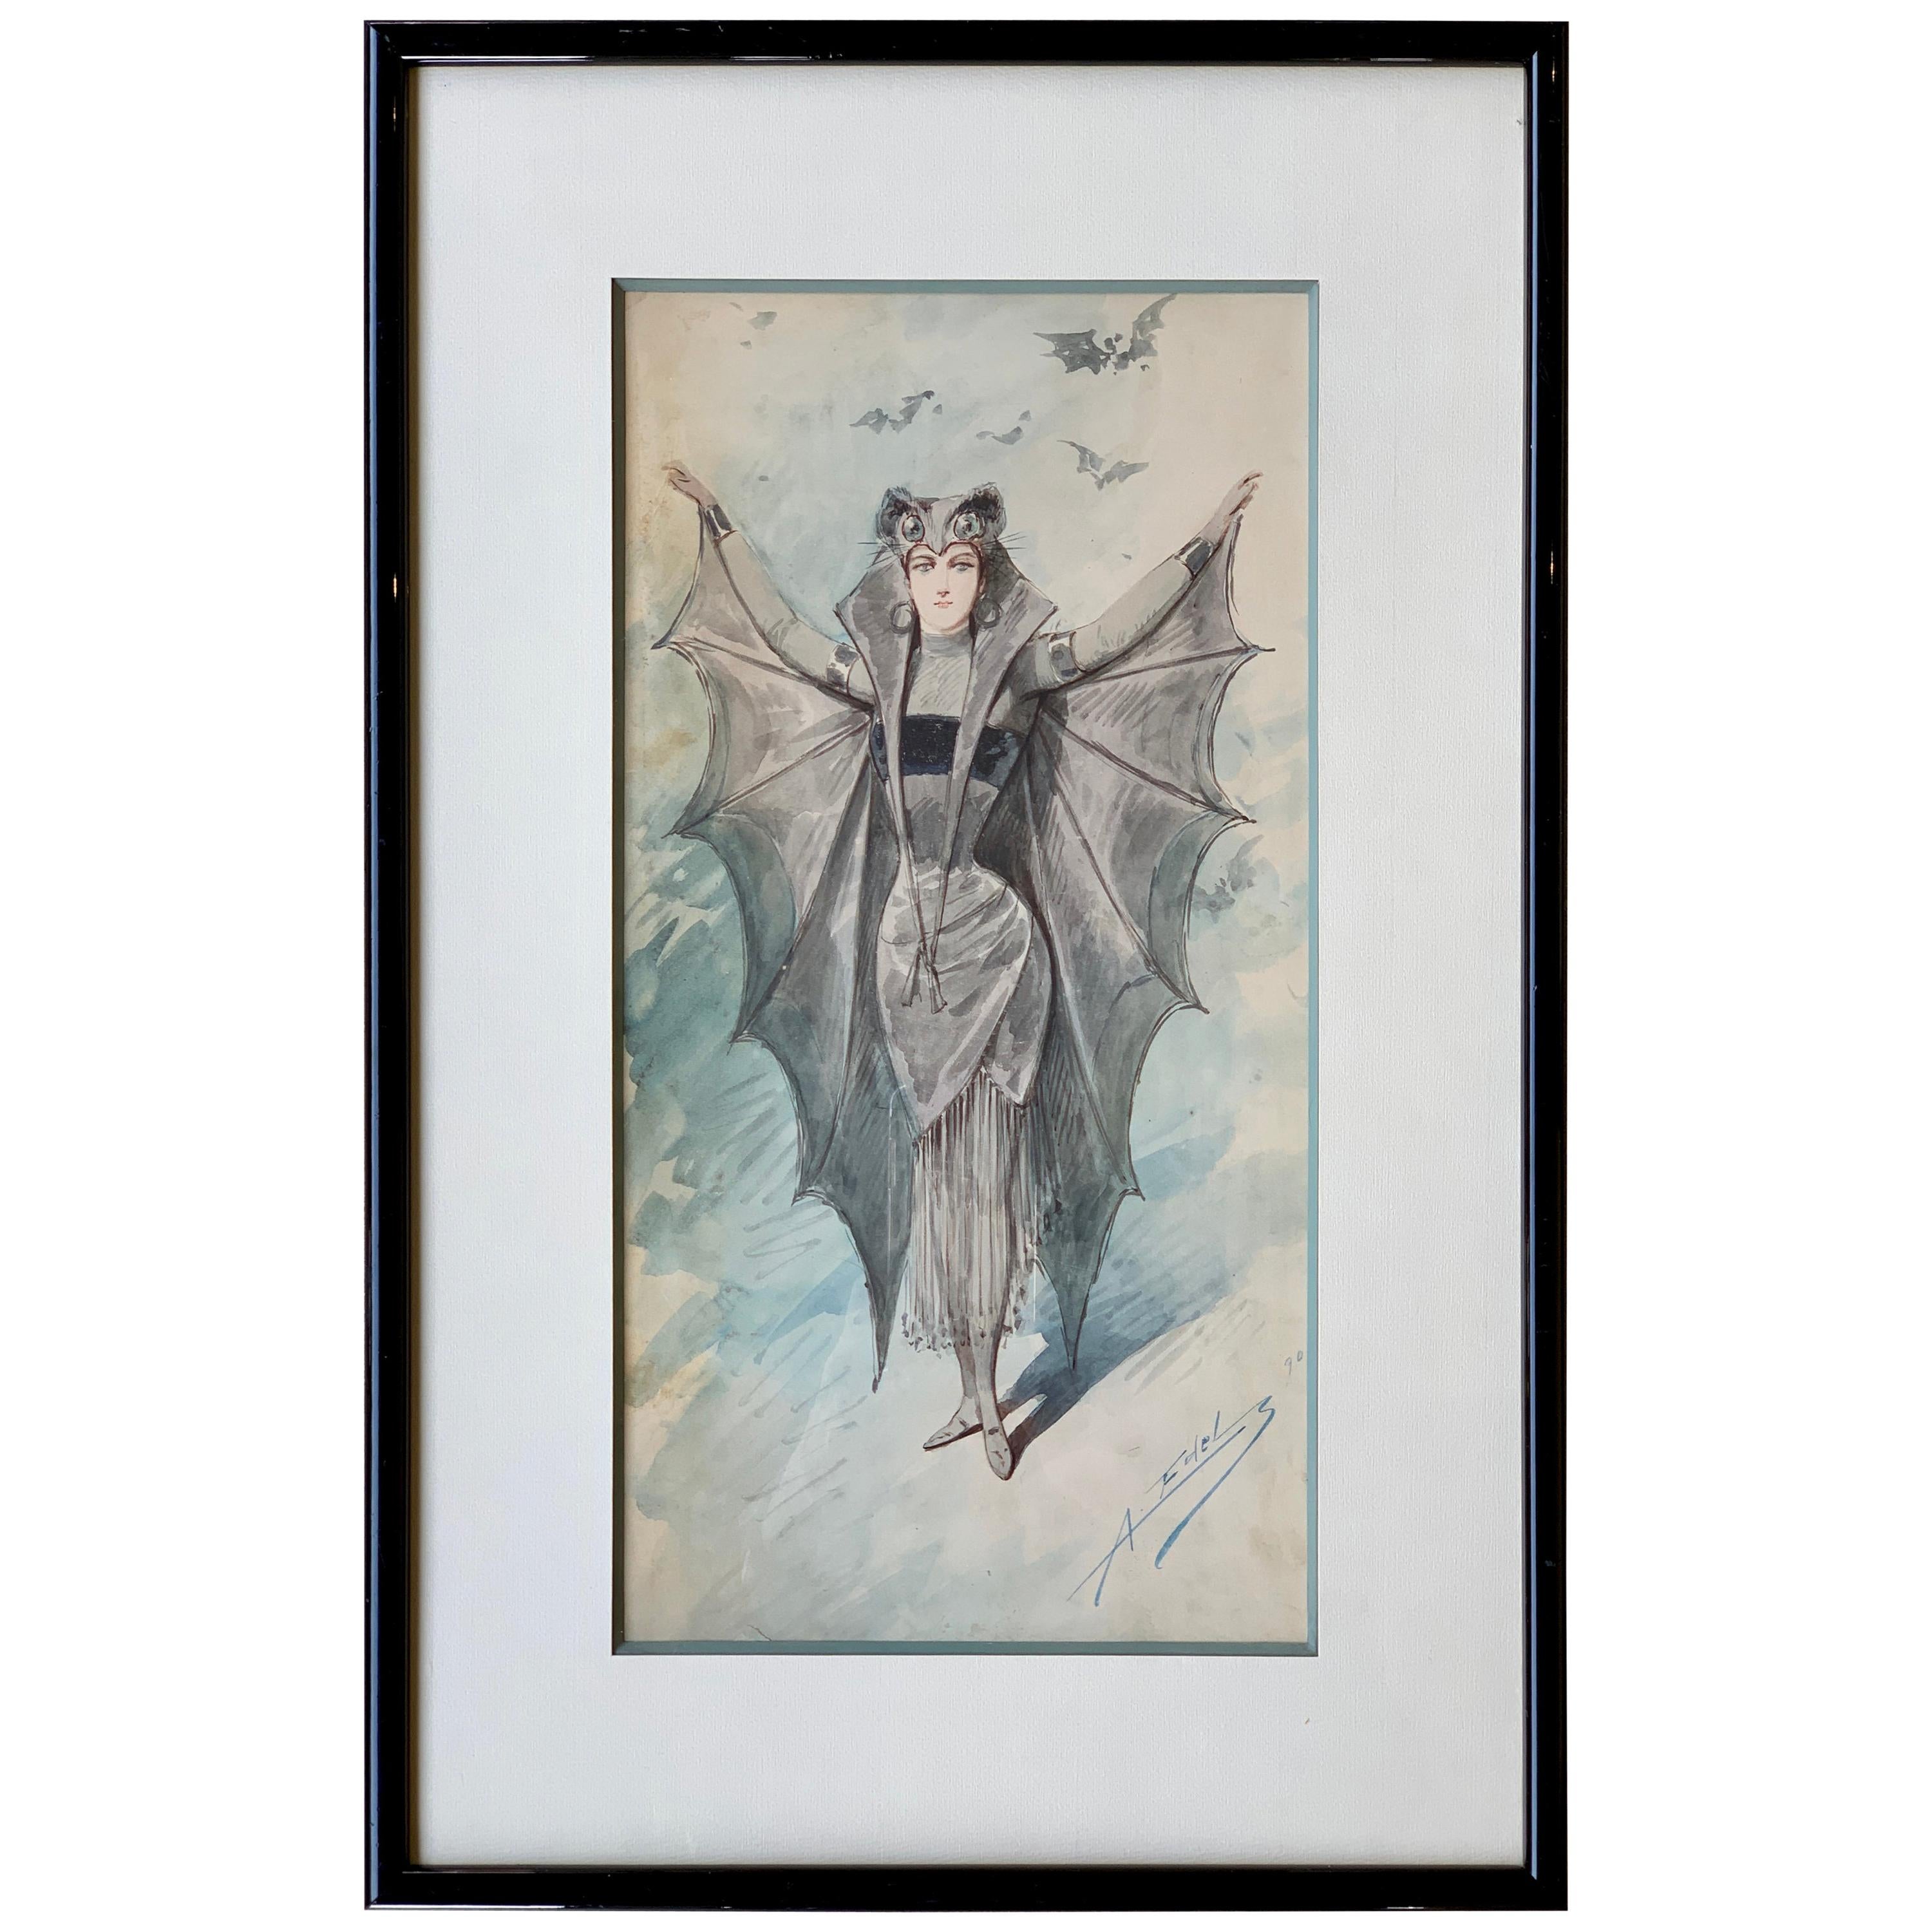 Original Art Nouveau Watercolor Painting of a Bat Woman by Alfredo Edel Colorno 